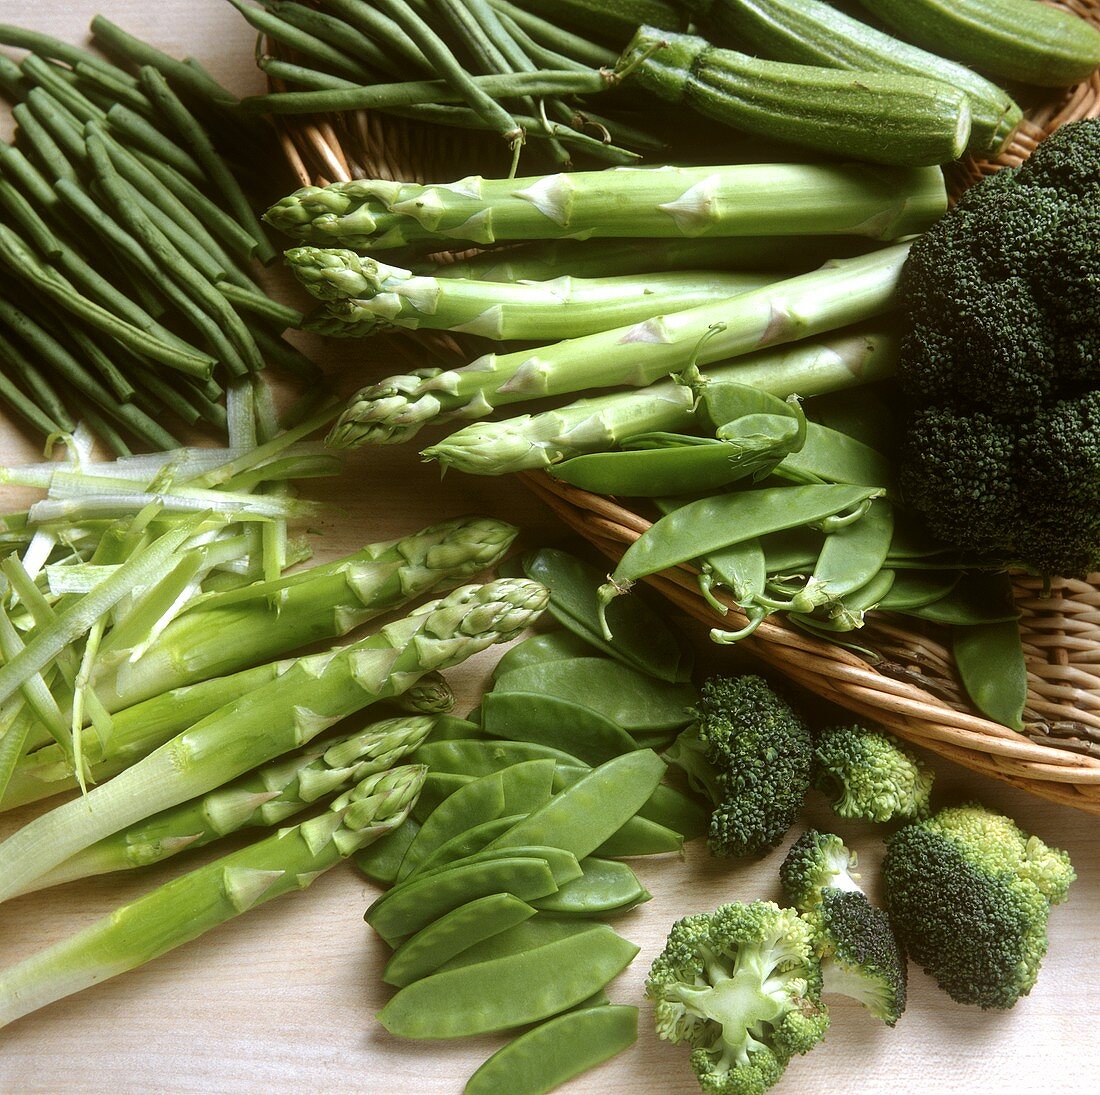 Green vegetables: asparagus, broccoli, mangetouts, beans